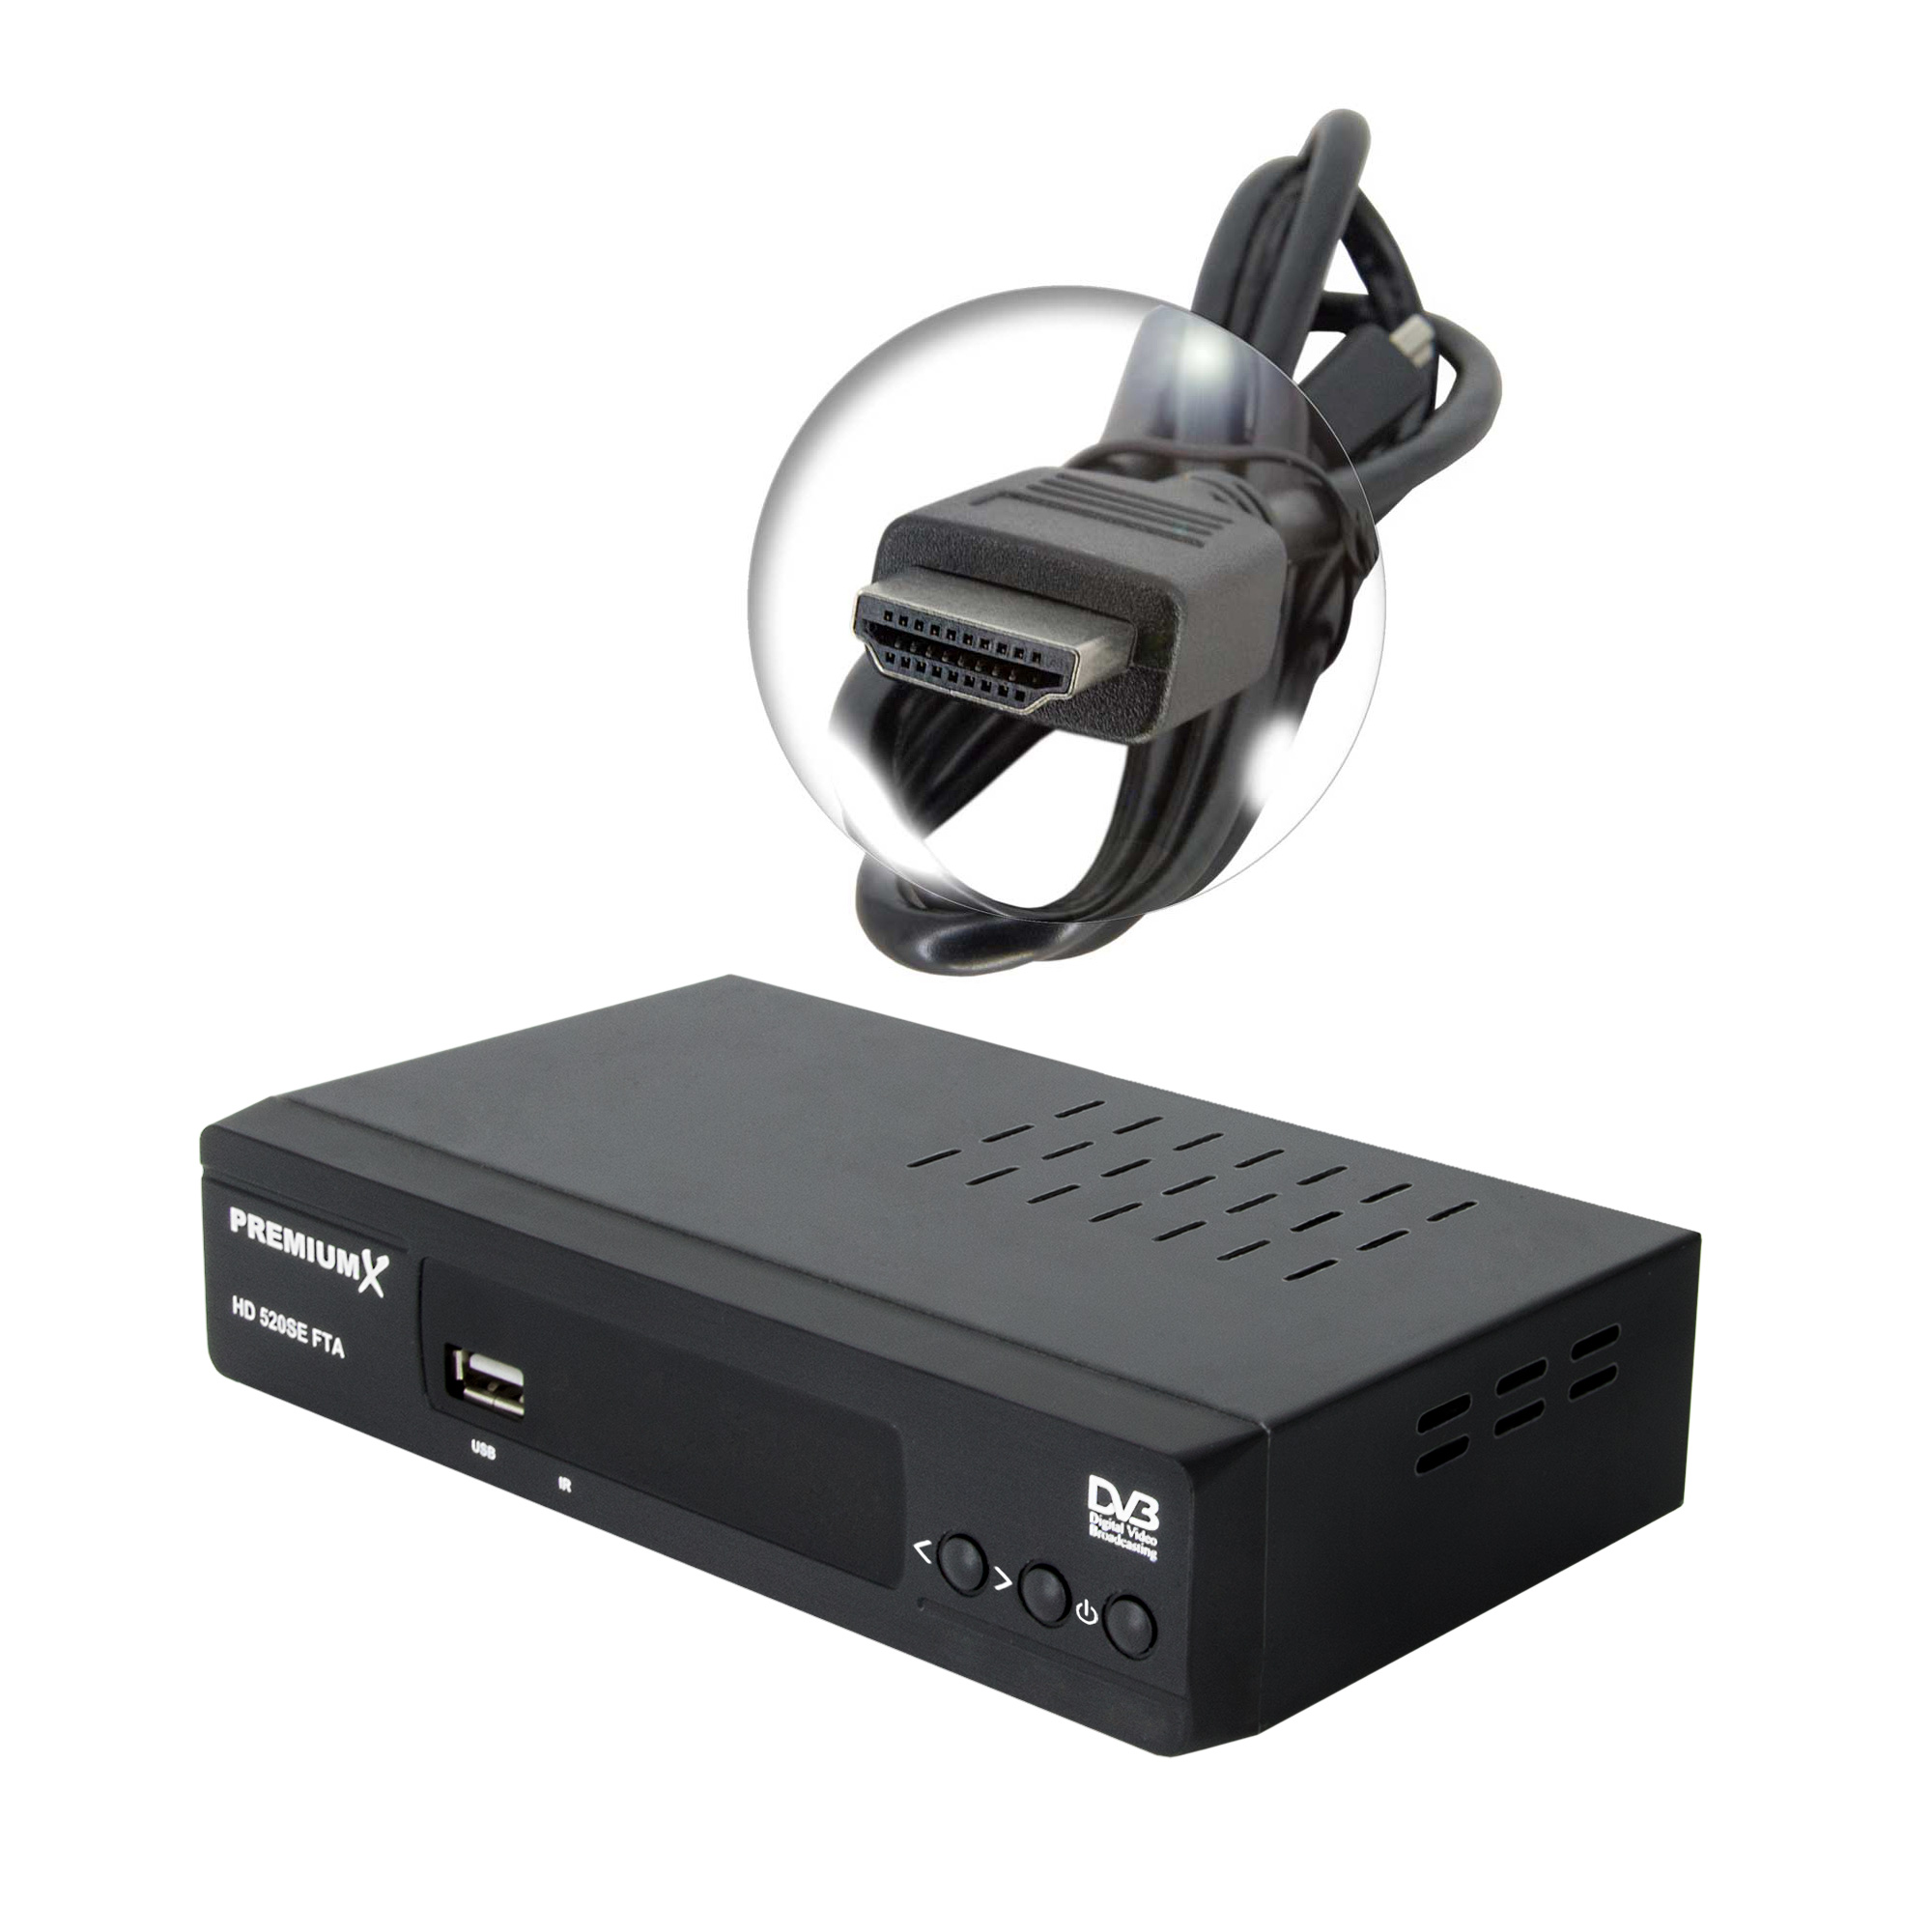 PREMIUMX HD 520SE FTA DVB-S2 HD SAT Digital Receiver SCART Receiver HDMI FullHD Sat USB (Schwarz)